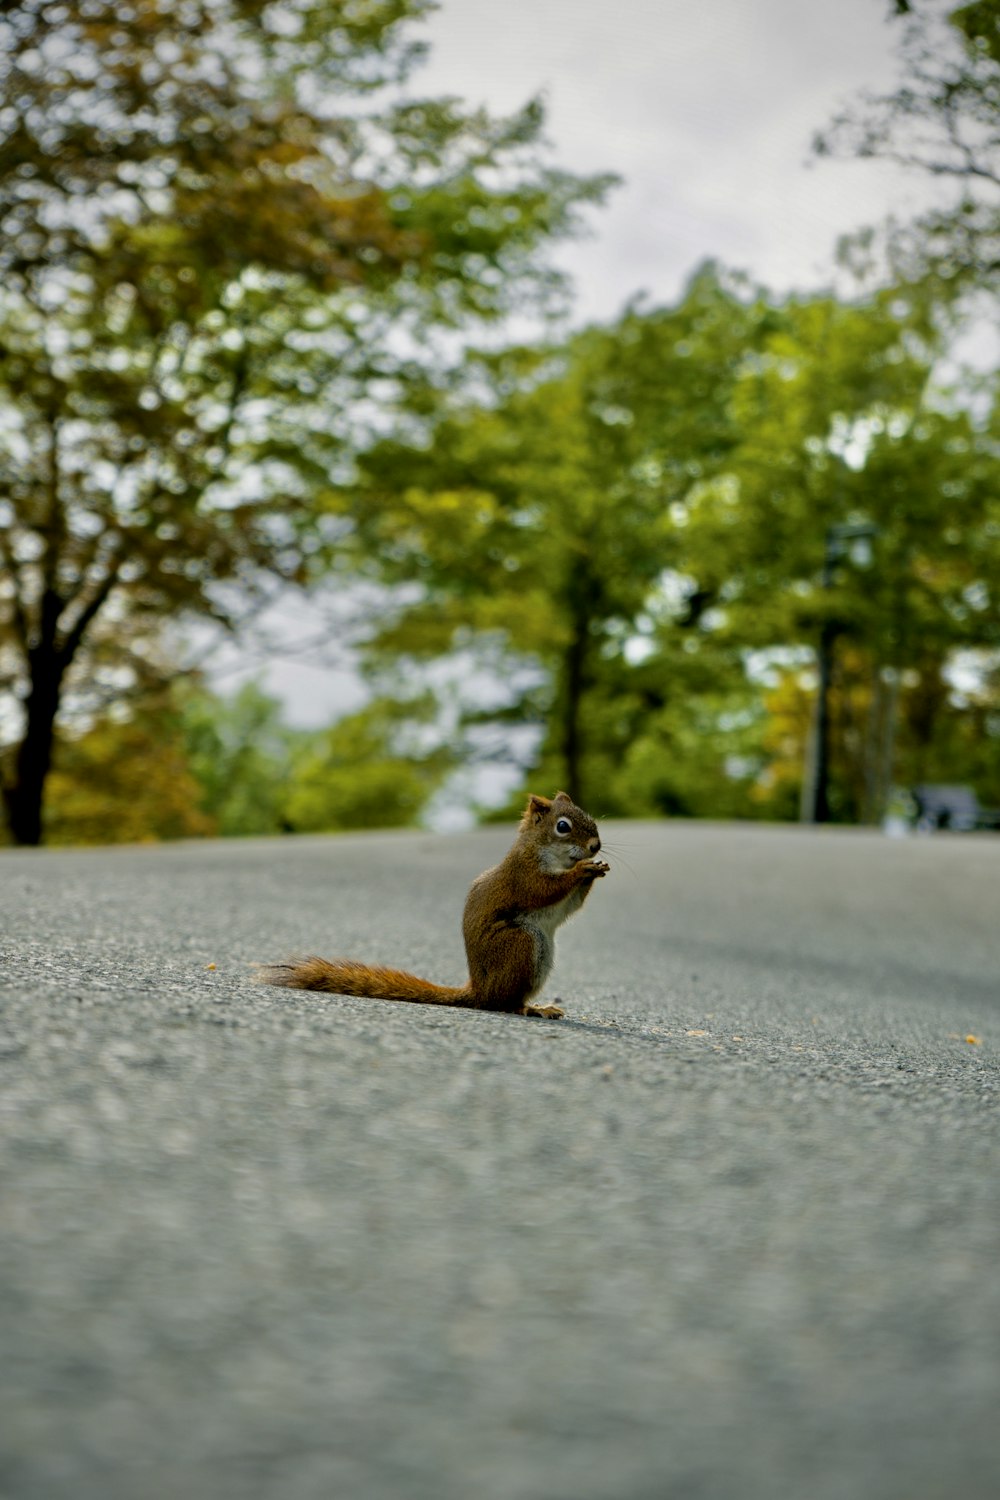 brown squirrel on gray asphalt road during daytime